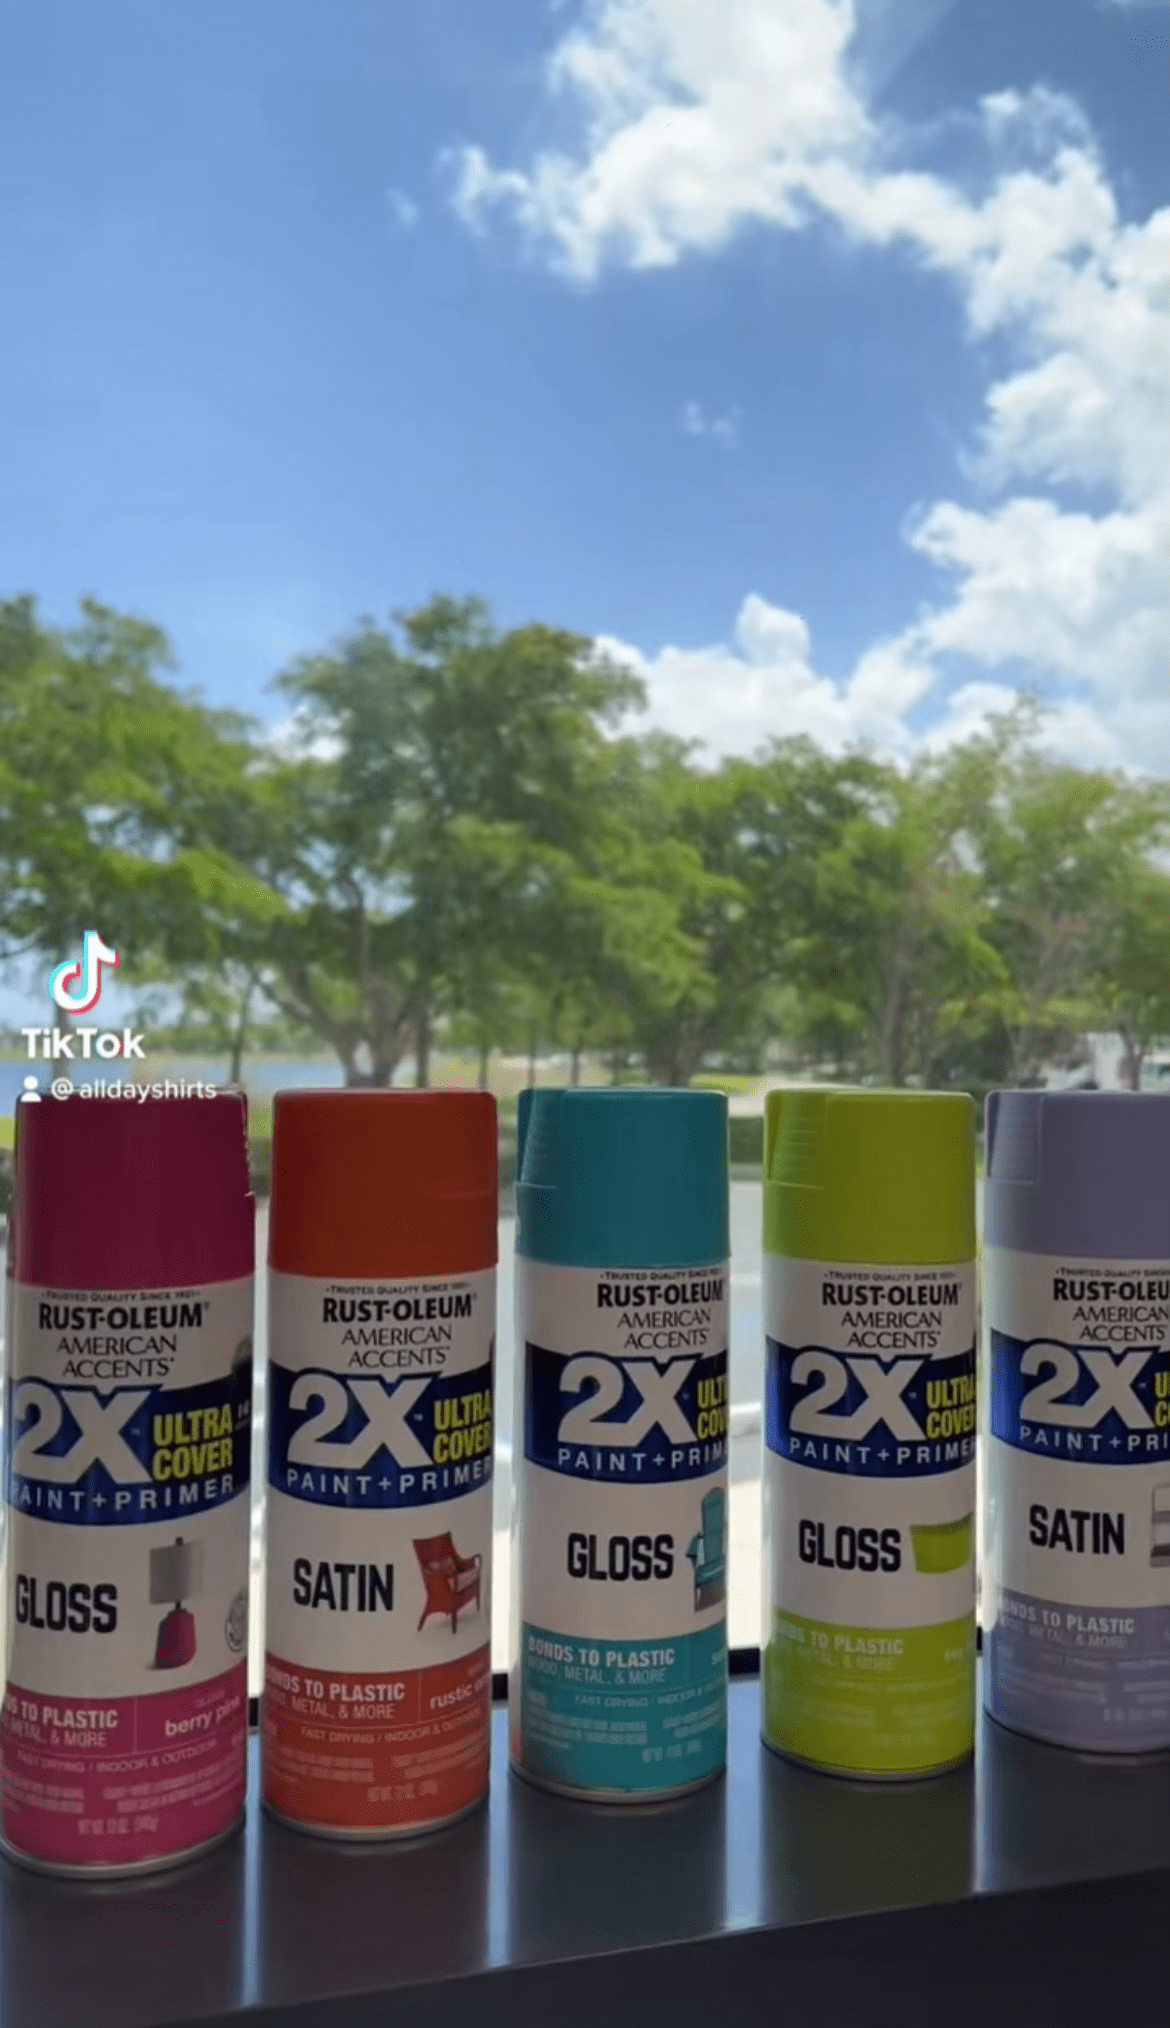 Rust-oleum spray paint